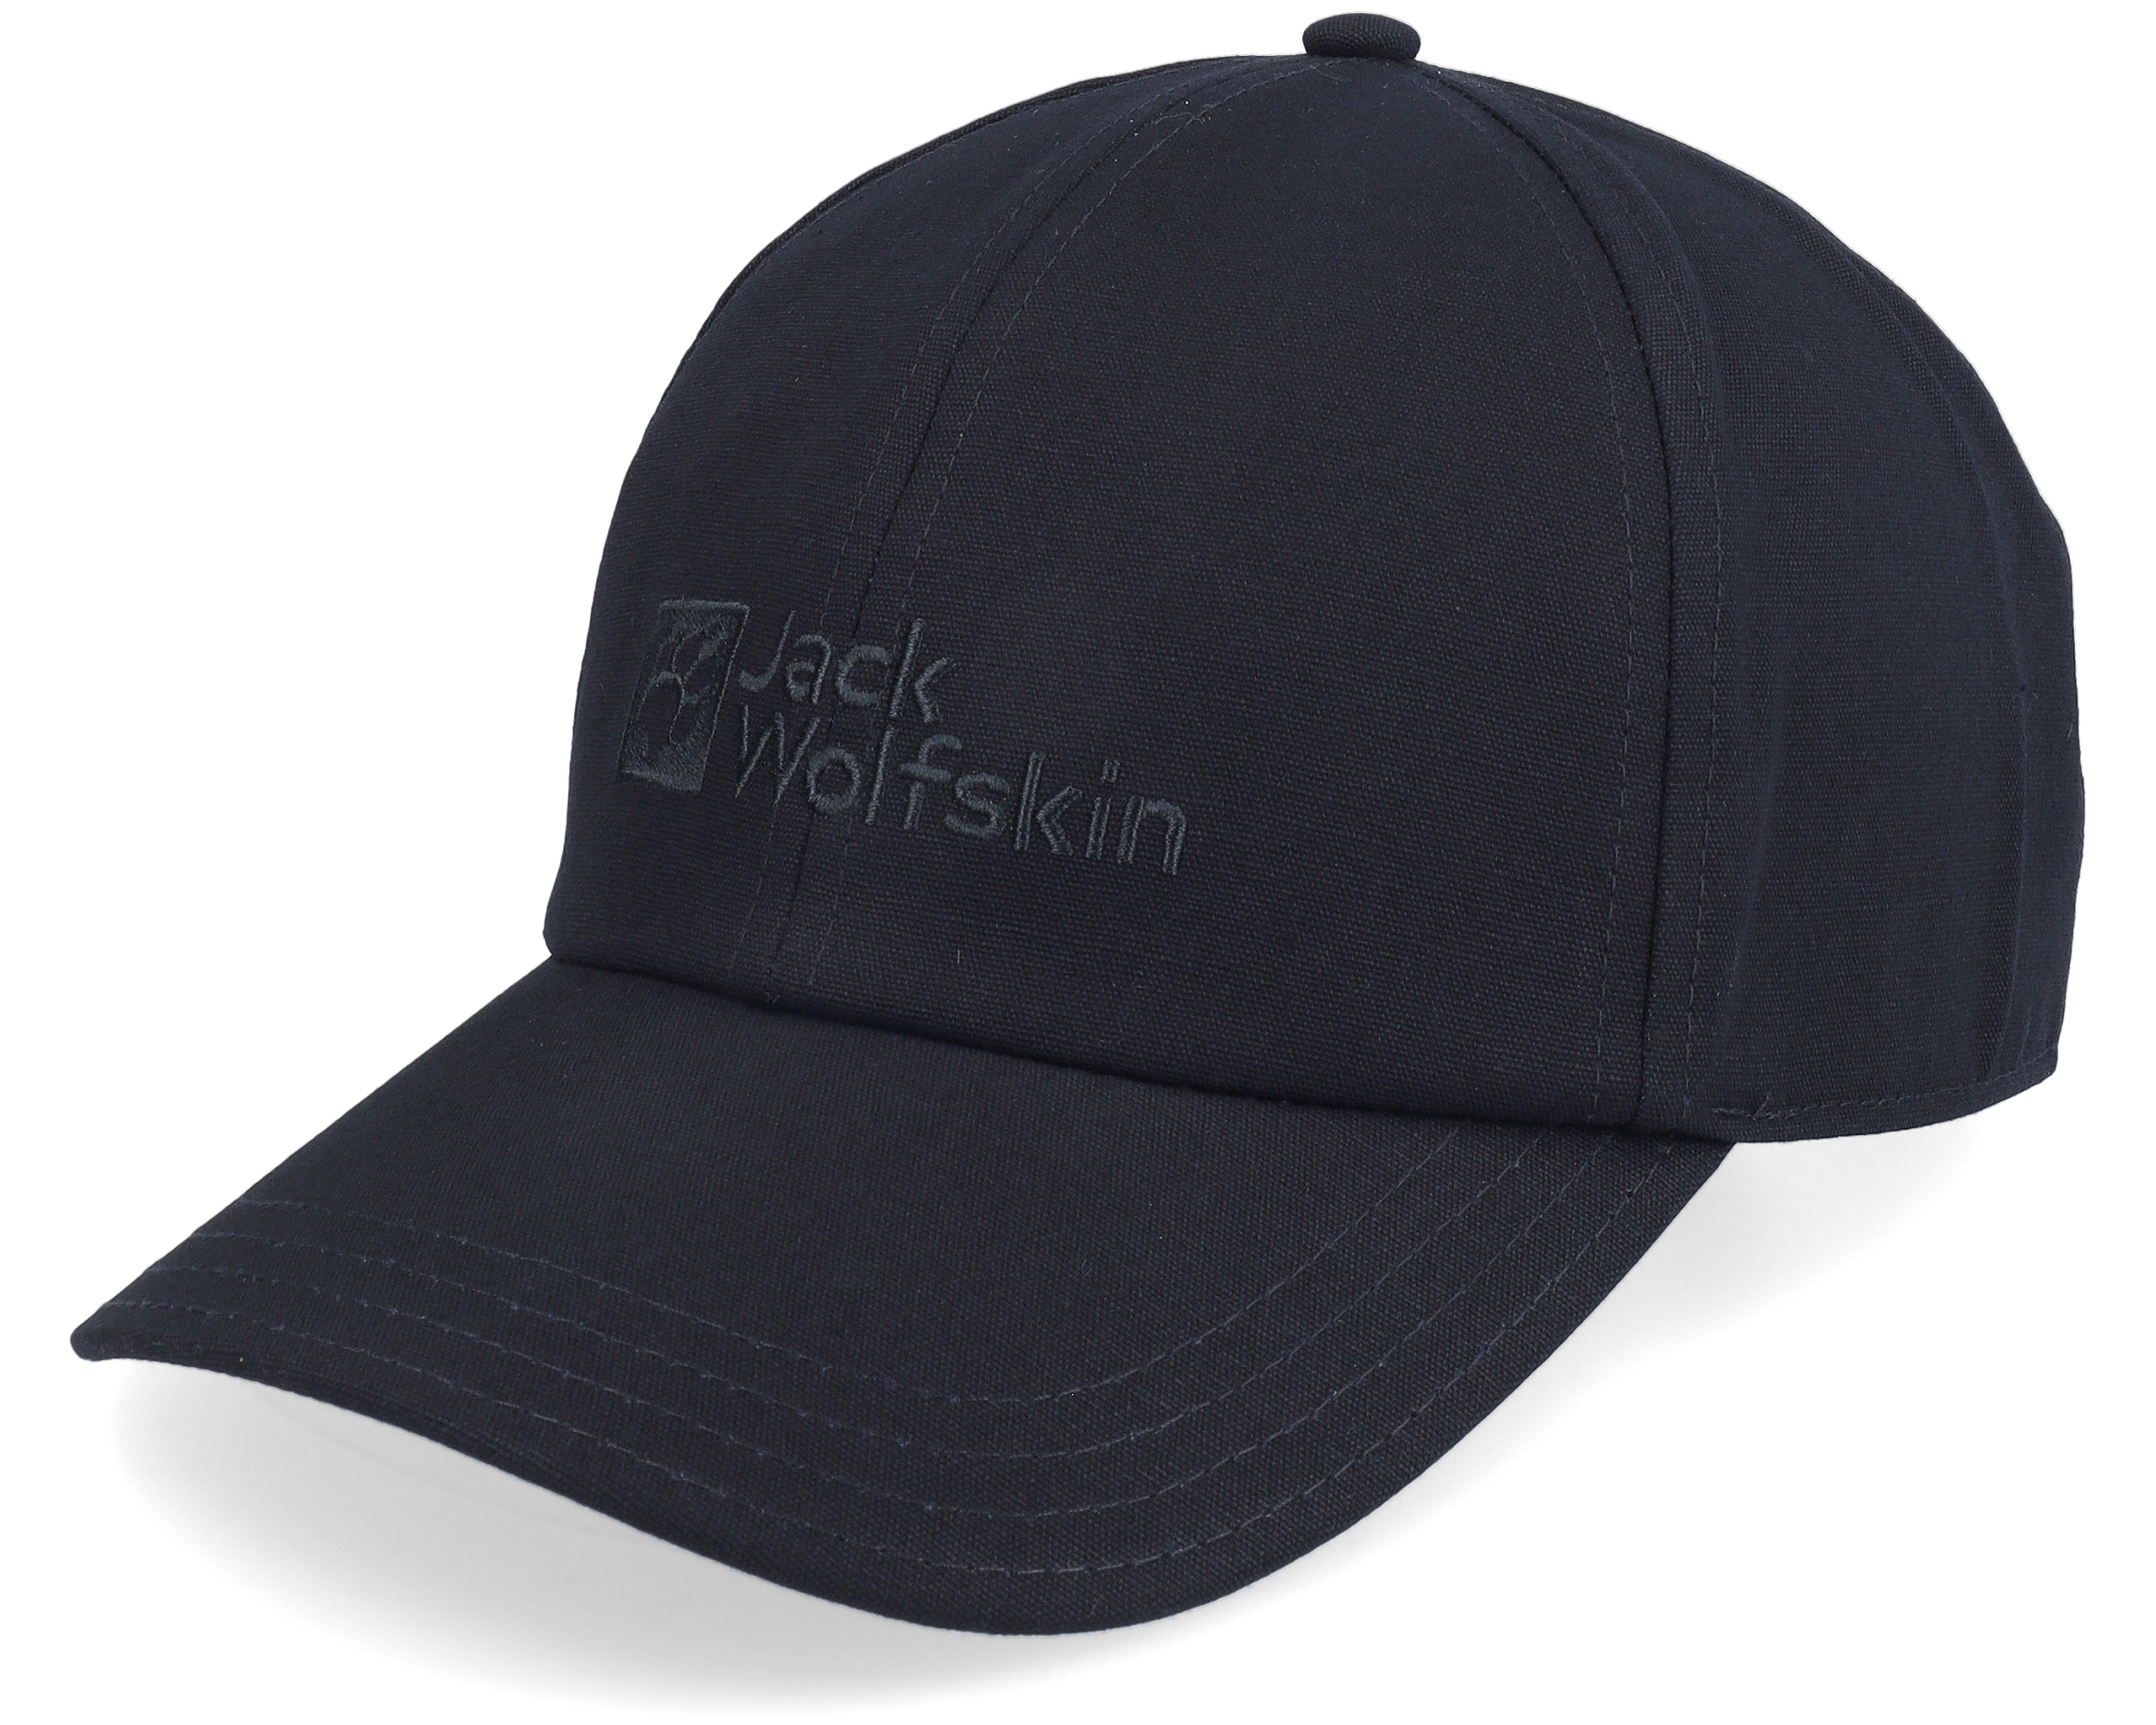 Baseball Cap Black Dad Cap Jack - Wolfskin cap